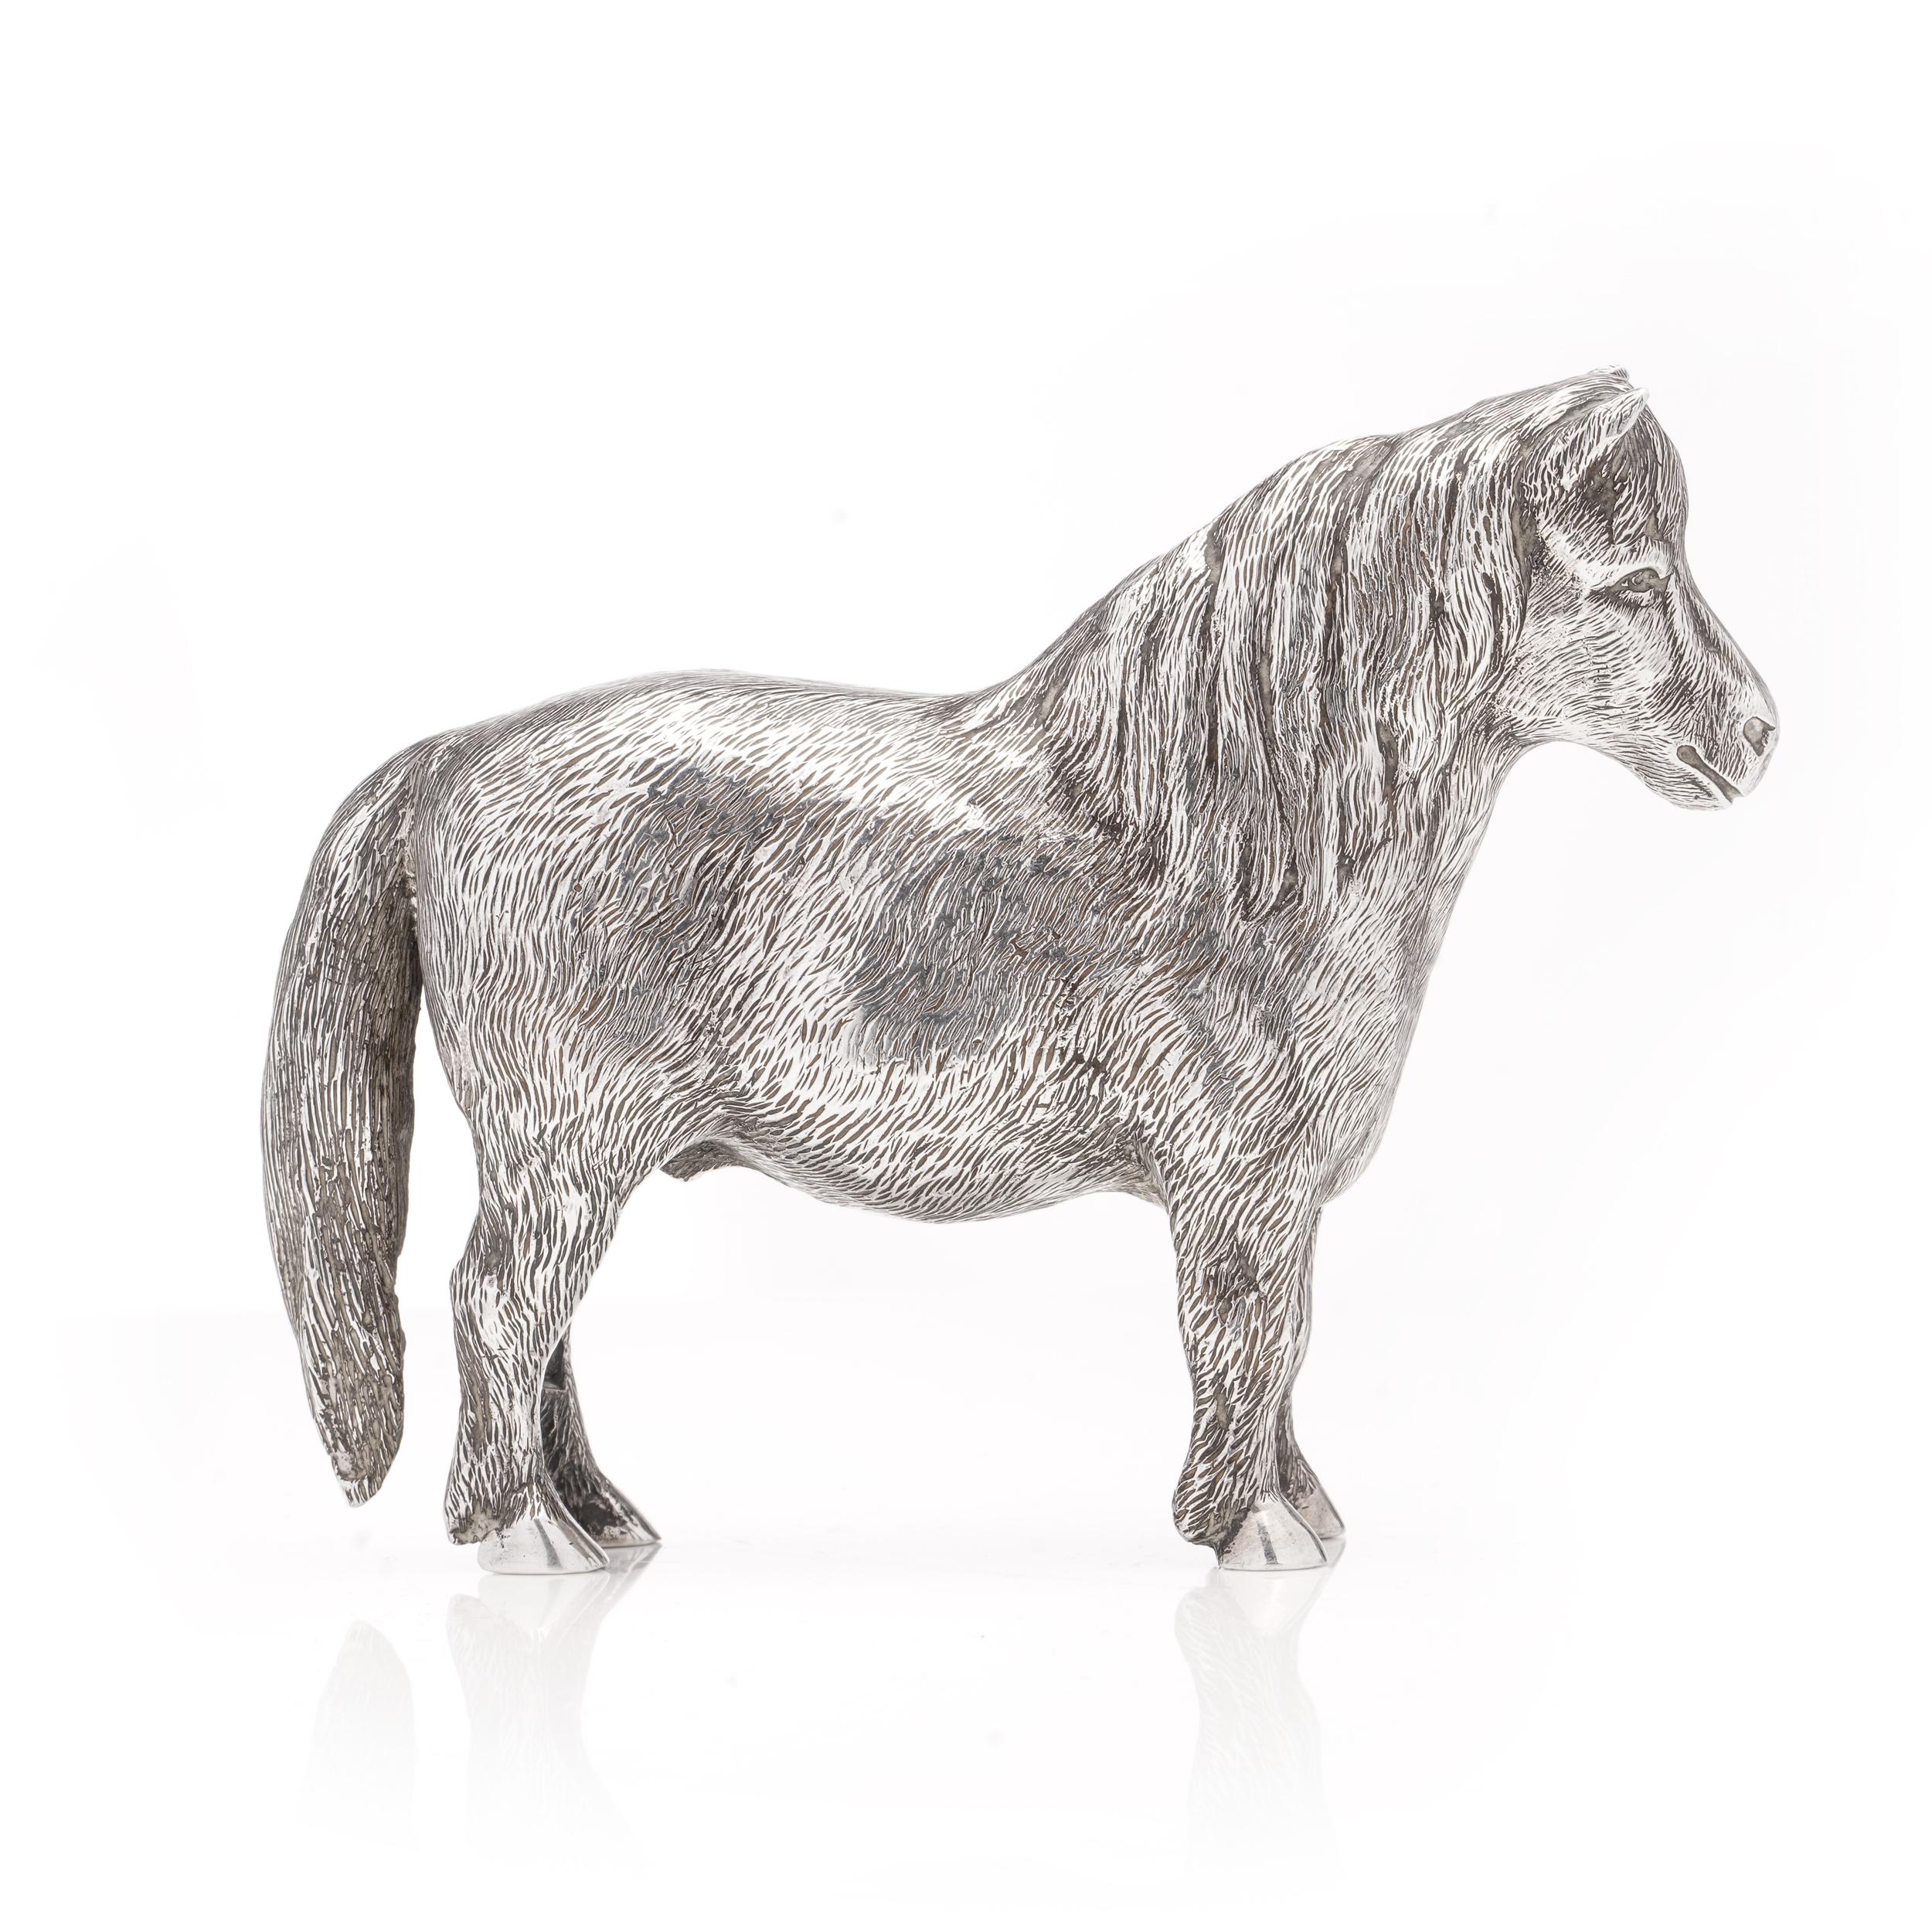 Late 20th Century Vintage sterling silver pony figurine by Edward Barnard & Sons Ltd., 1975